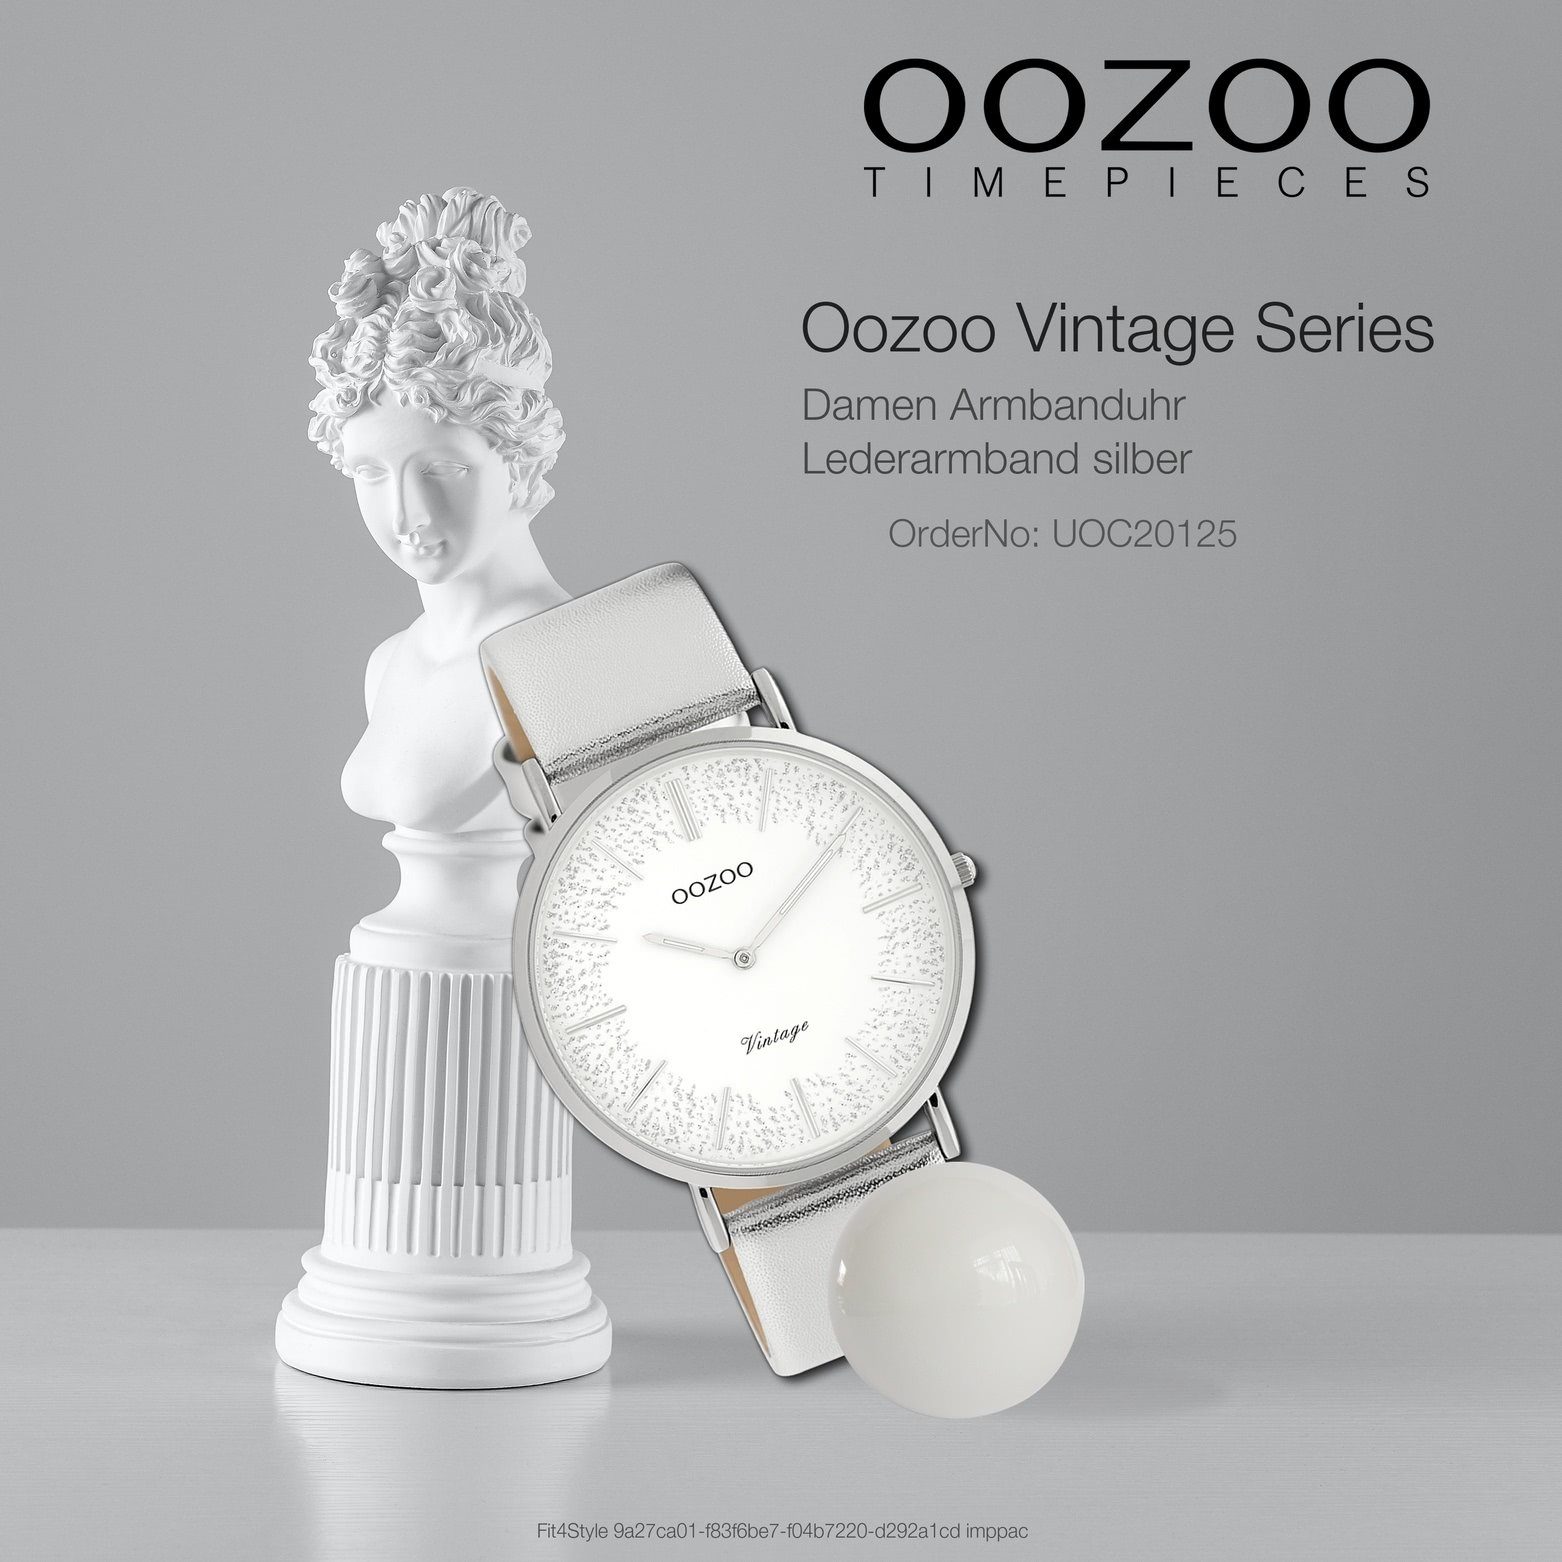 Lederarmband, groß Armbanduhr (ca. silber Damen Analog, 40mm) Oozoo rund, Damenuhr Quarzuhr Elegant-Style OOZOO